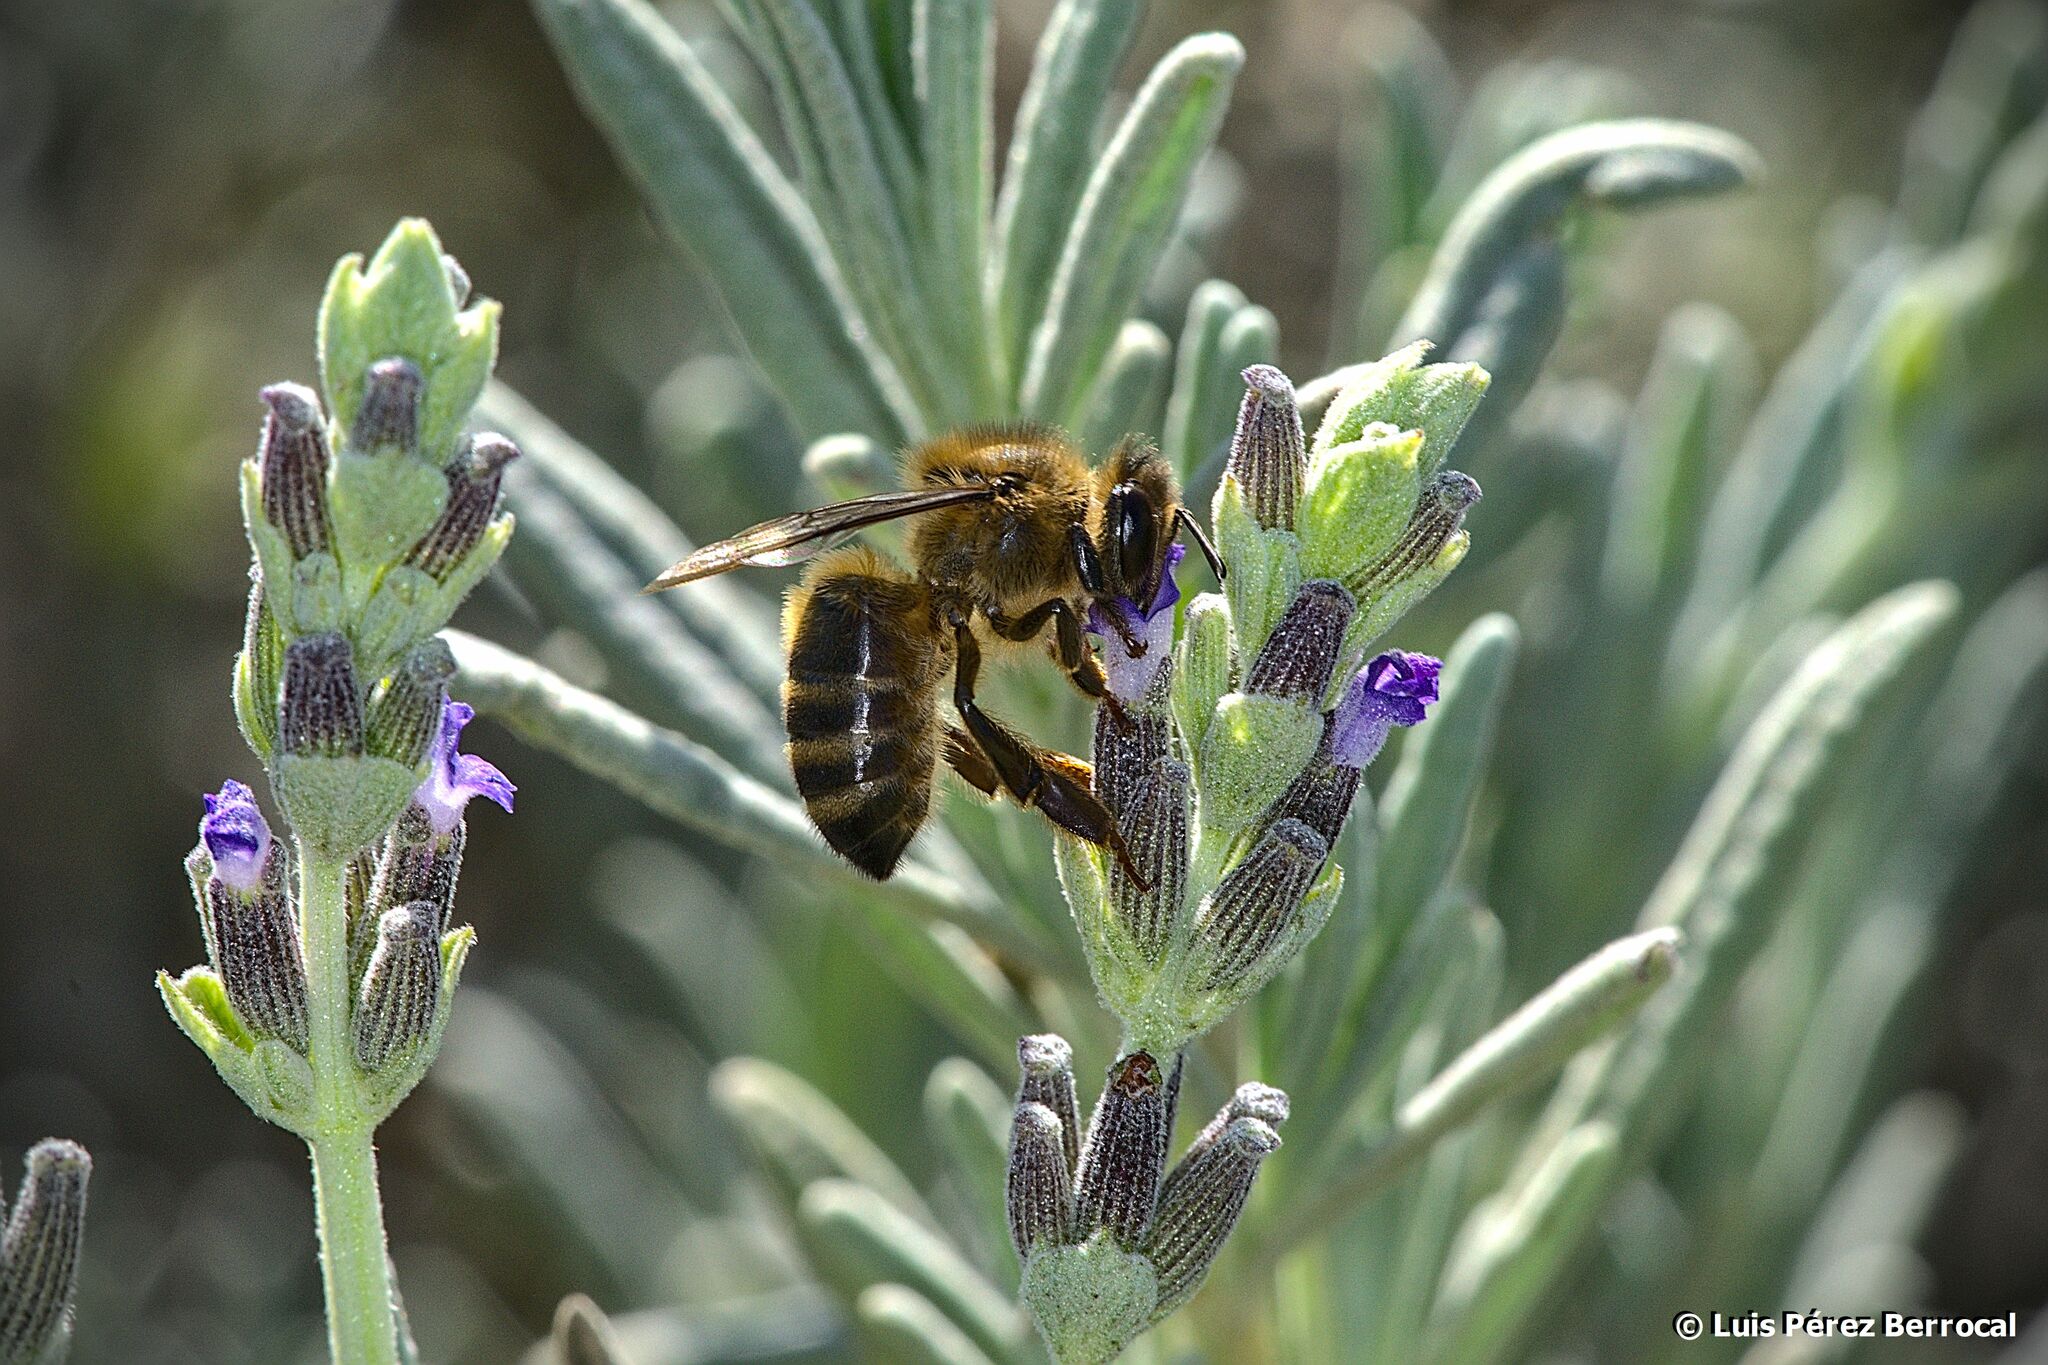 Western honey bee - Wikipedia